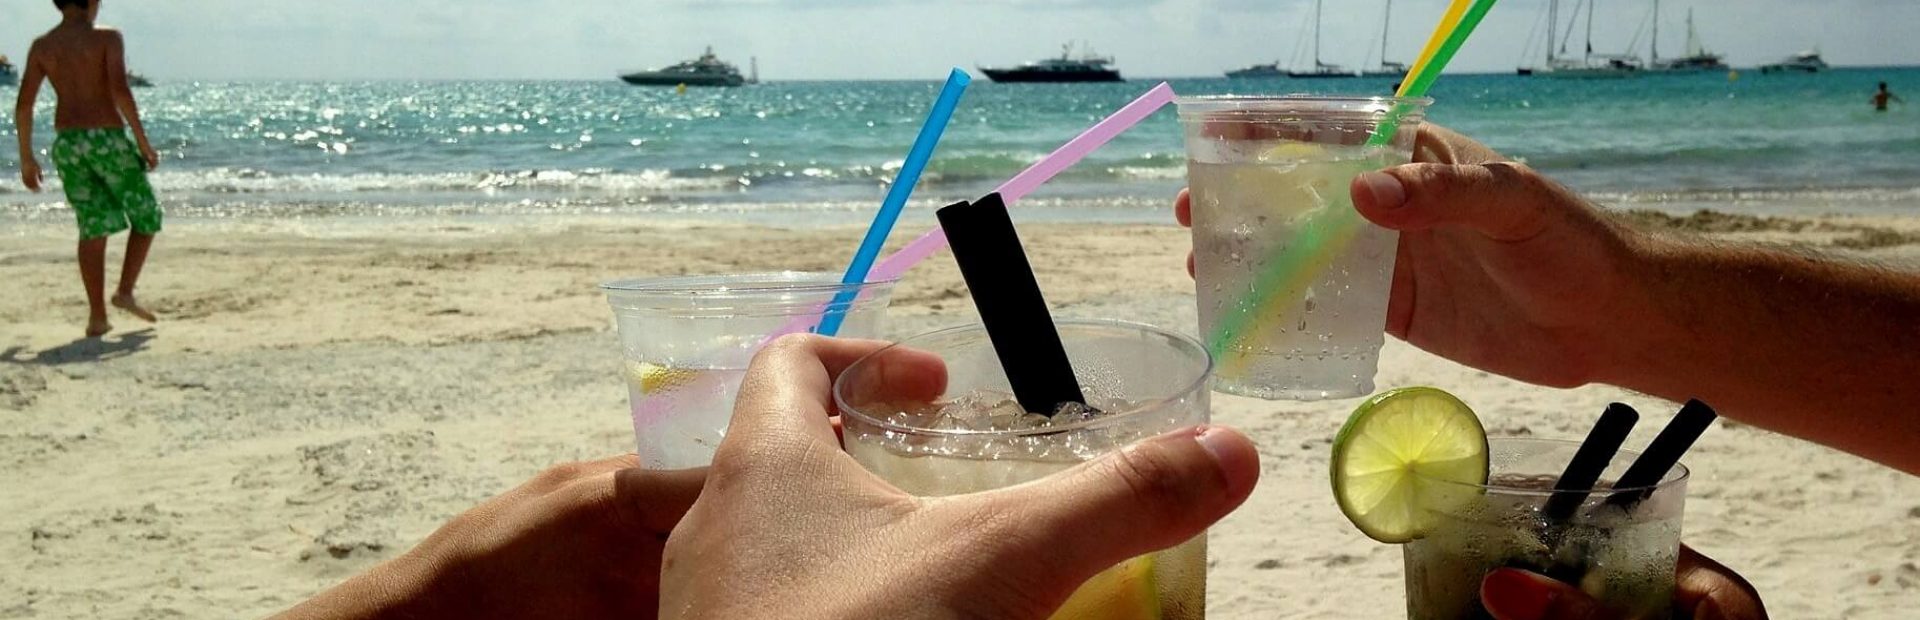 Cocktails in Cuba